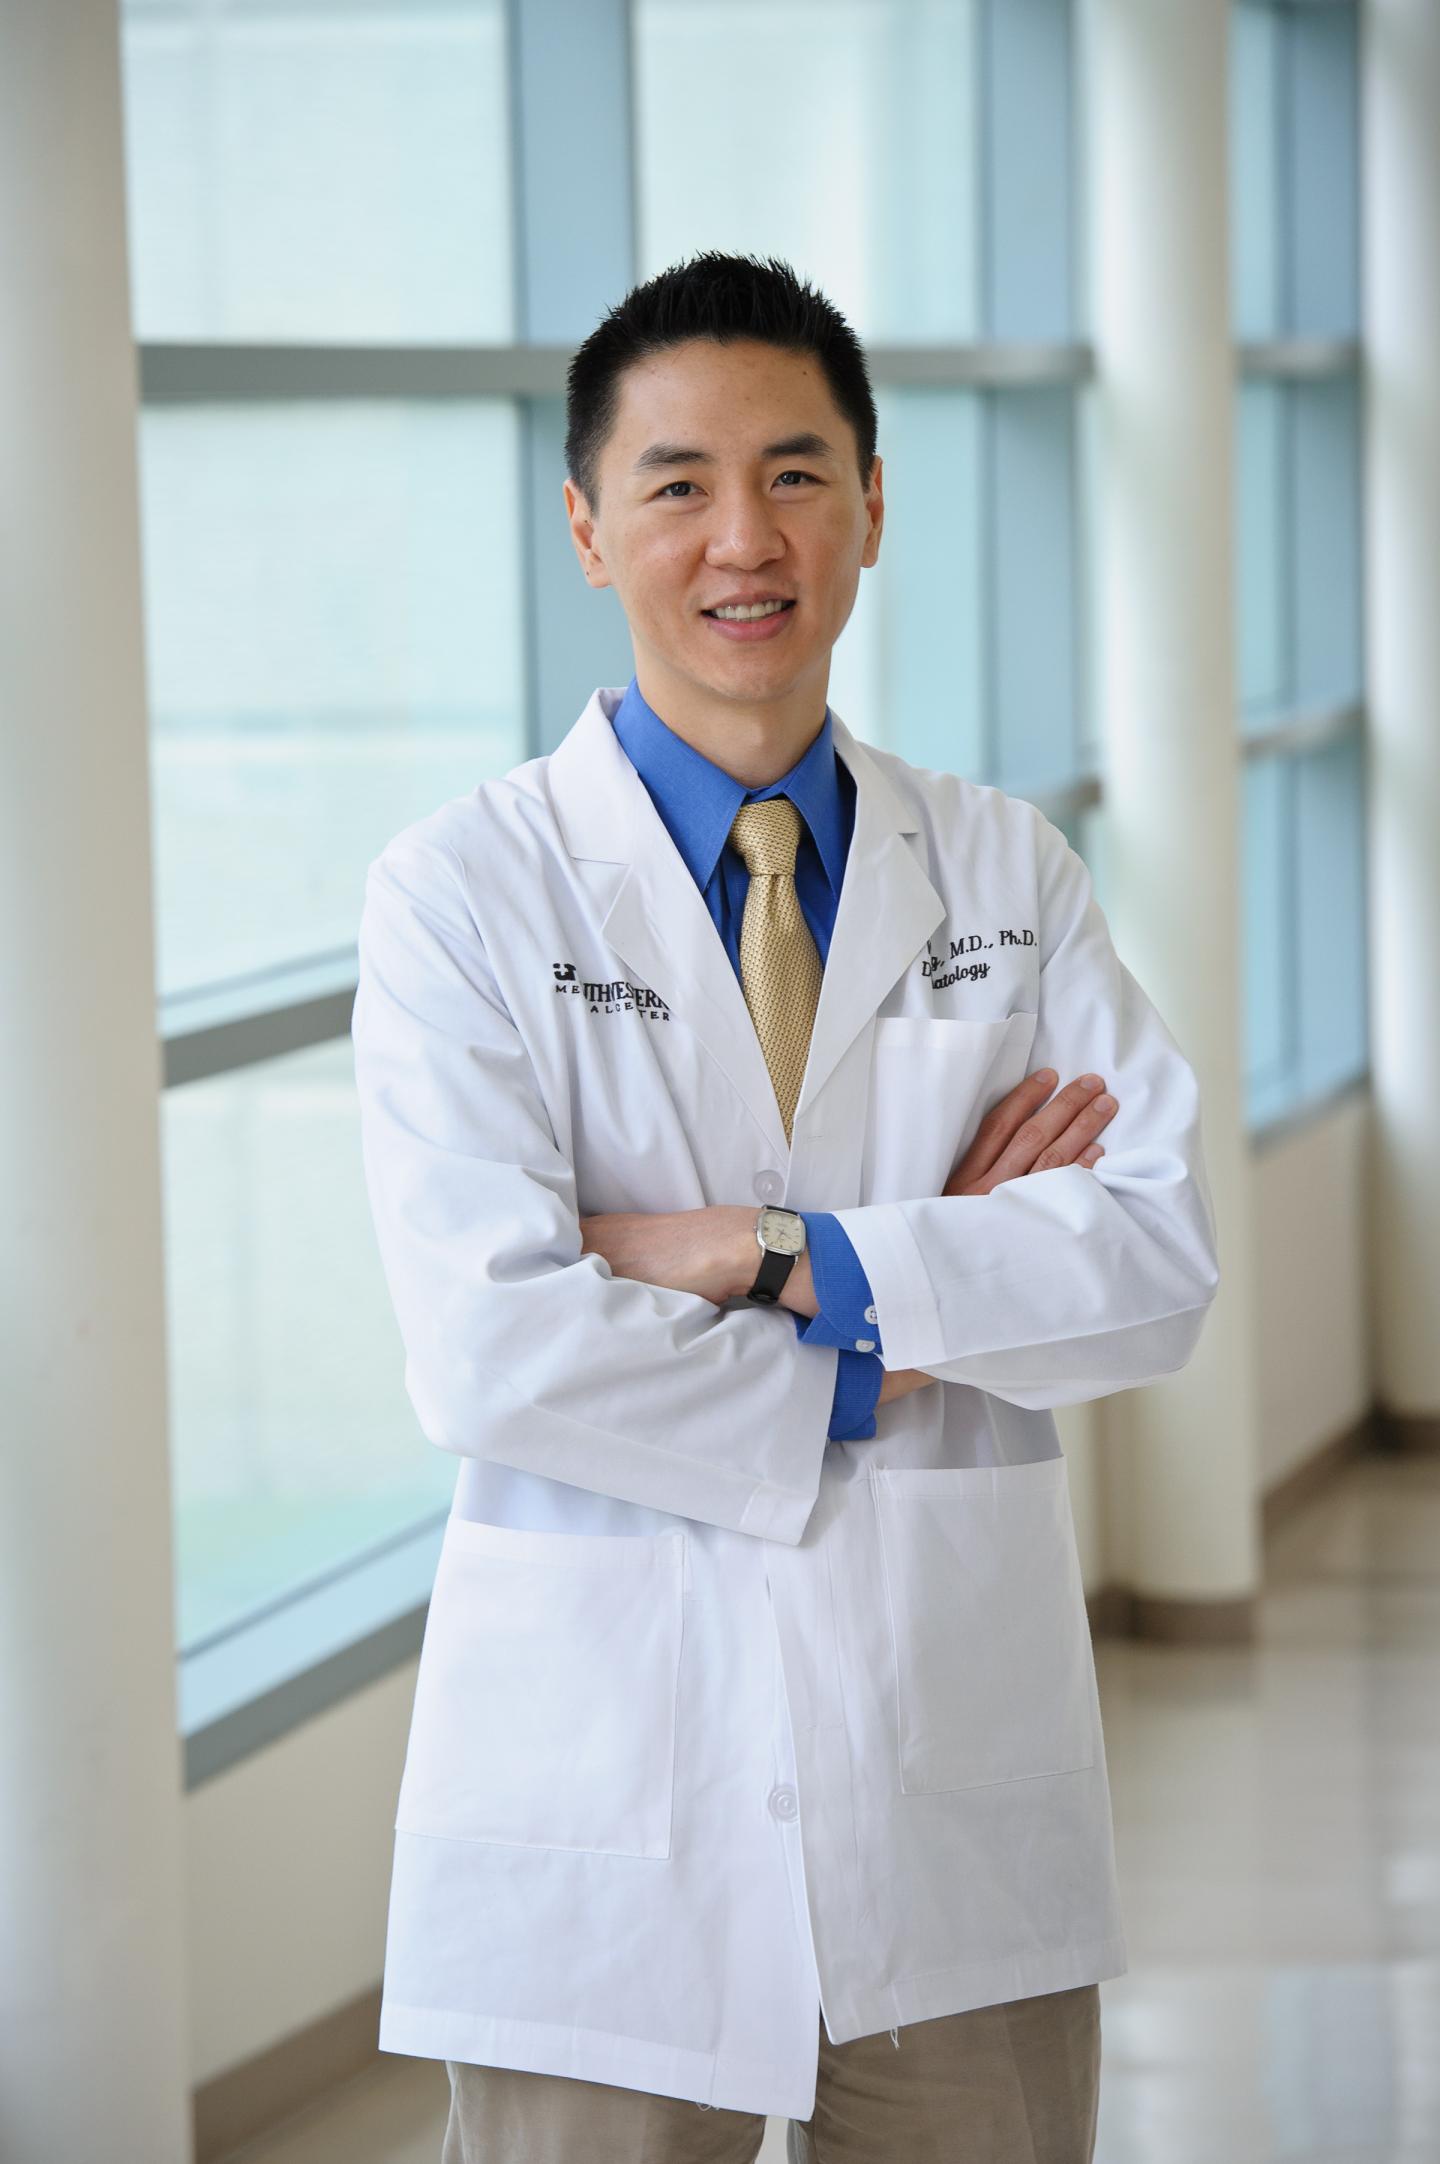 Richard Wang, University of Texas Southwestern Medical Center